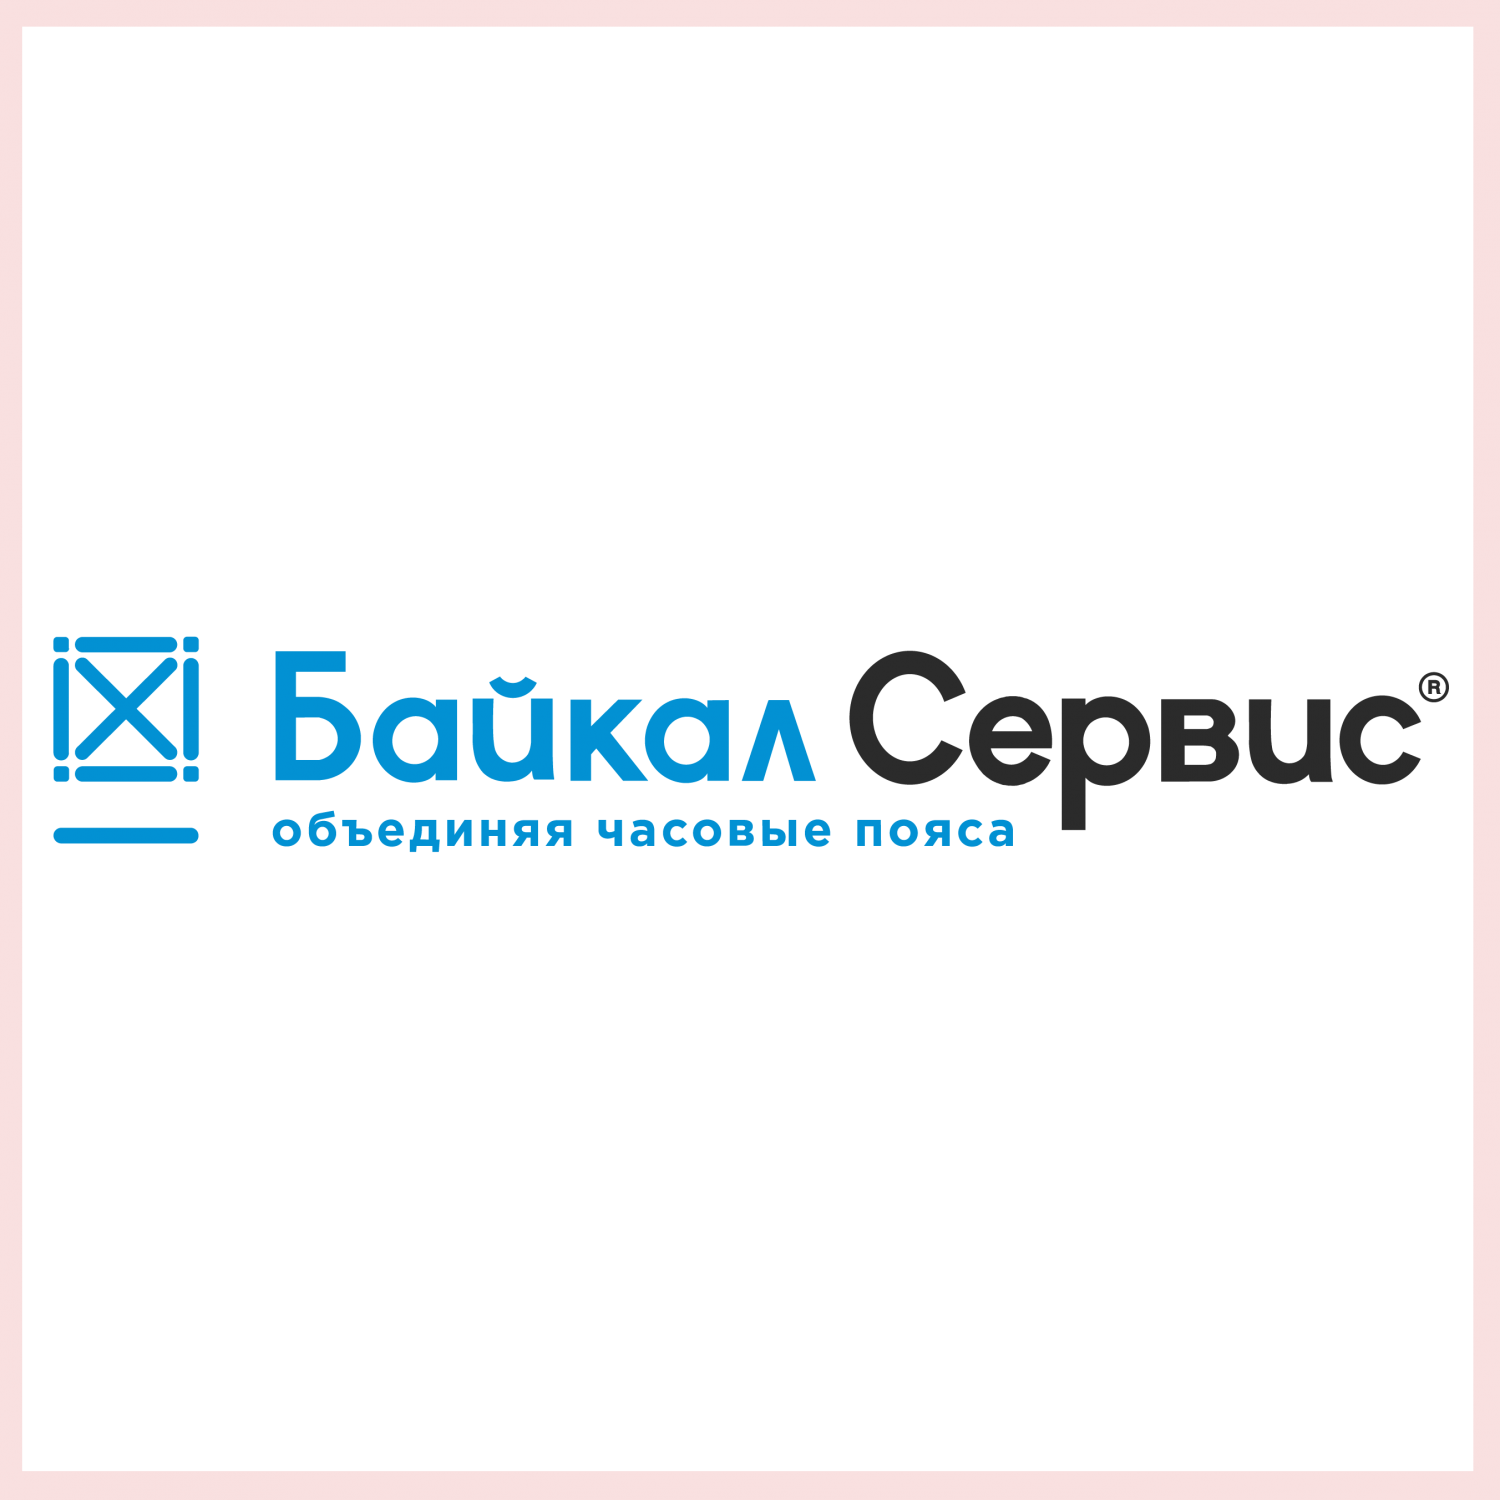 Байкал сервис. Байкал сервис транспортная компания. Байкал сервис лого. Логотип компании Байкал сервис. Байкал транспортная телефон